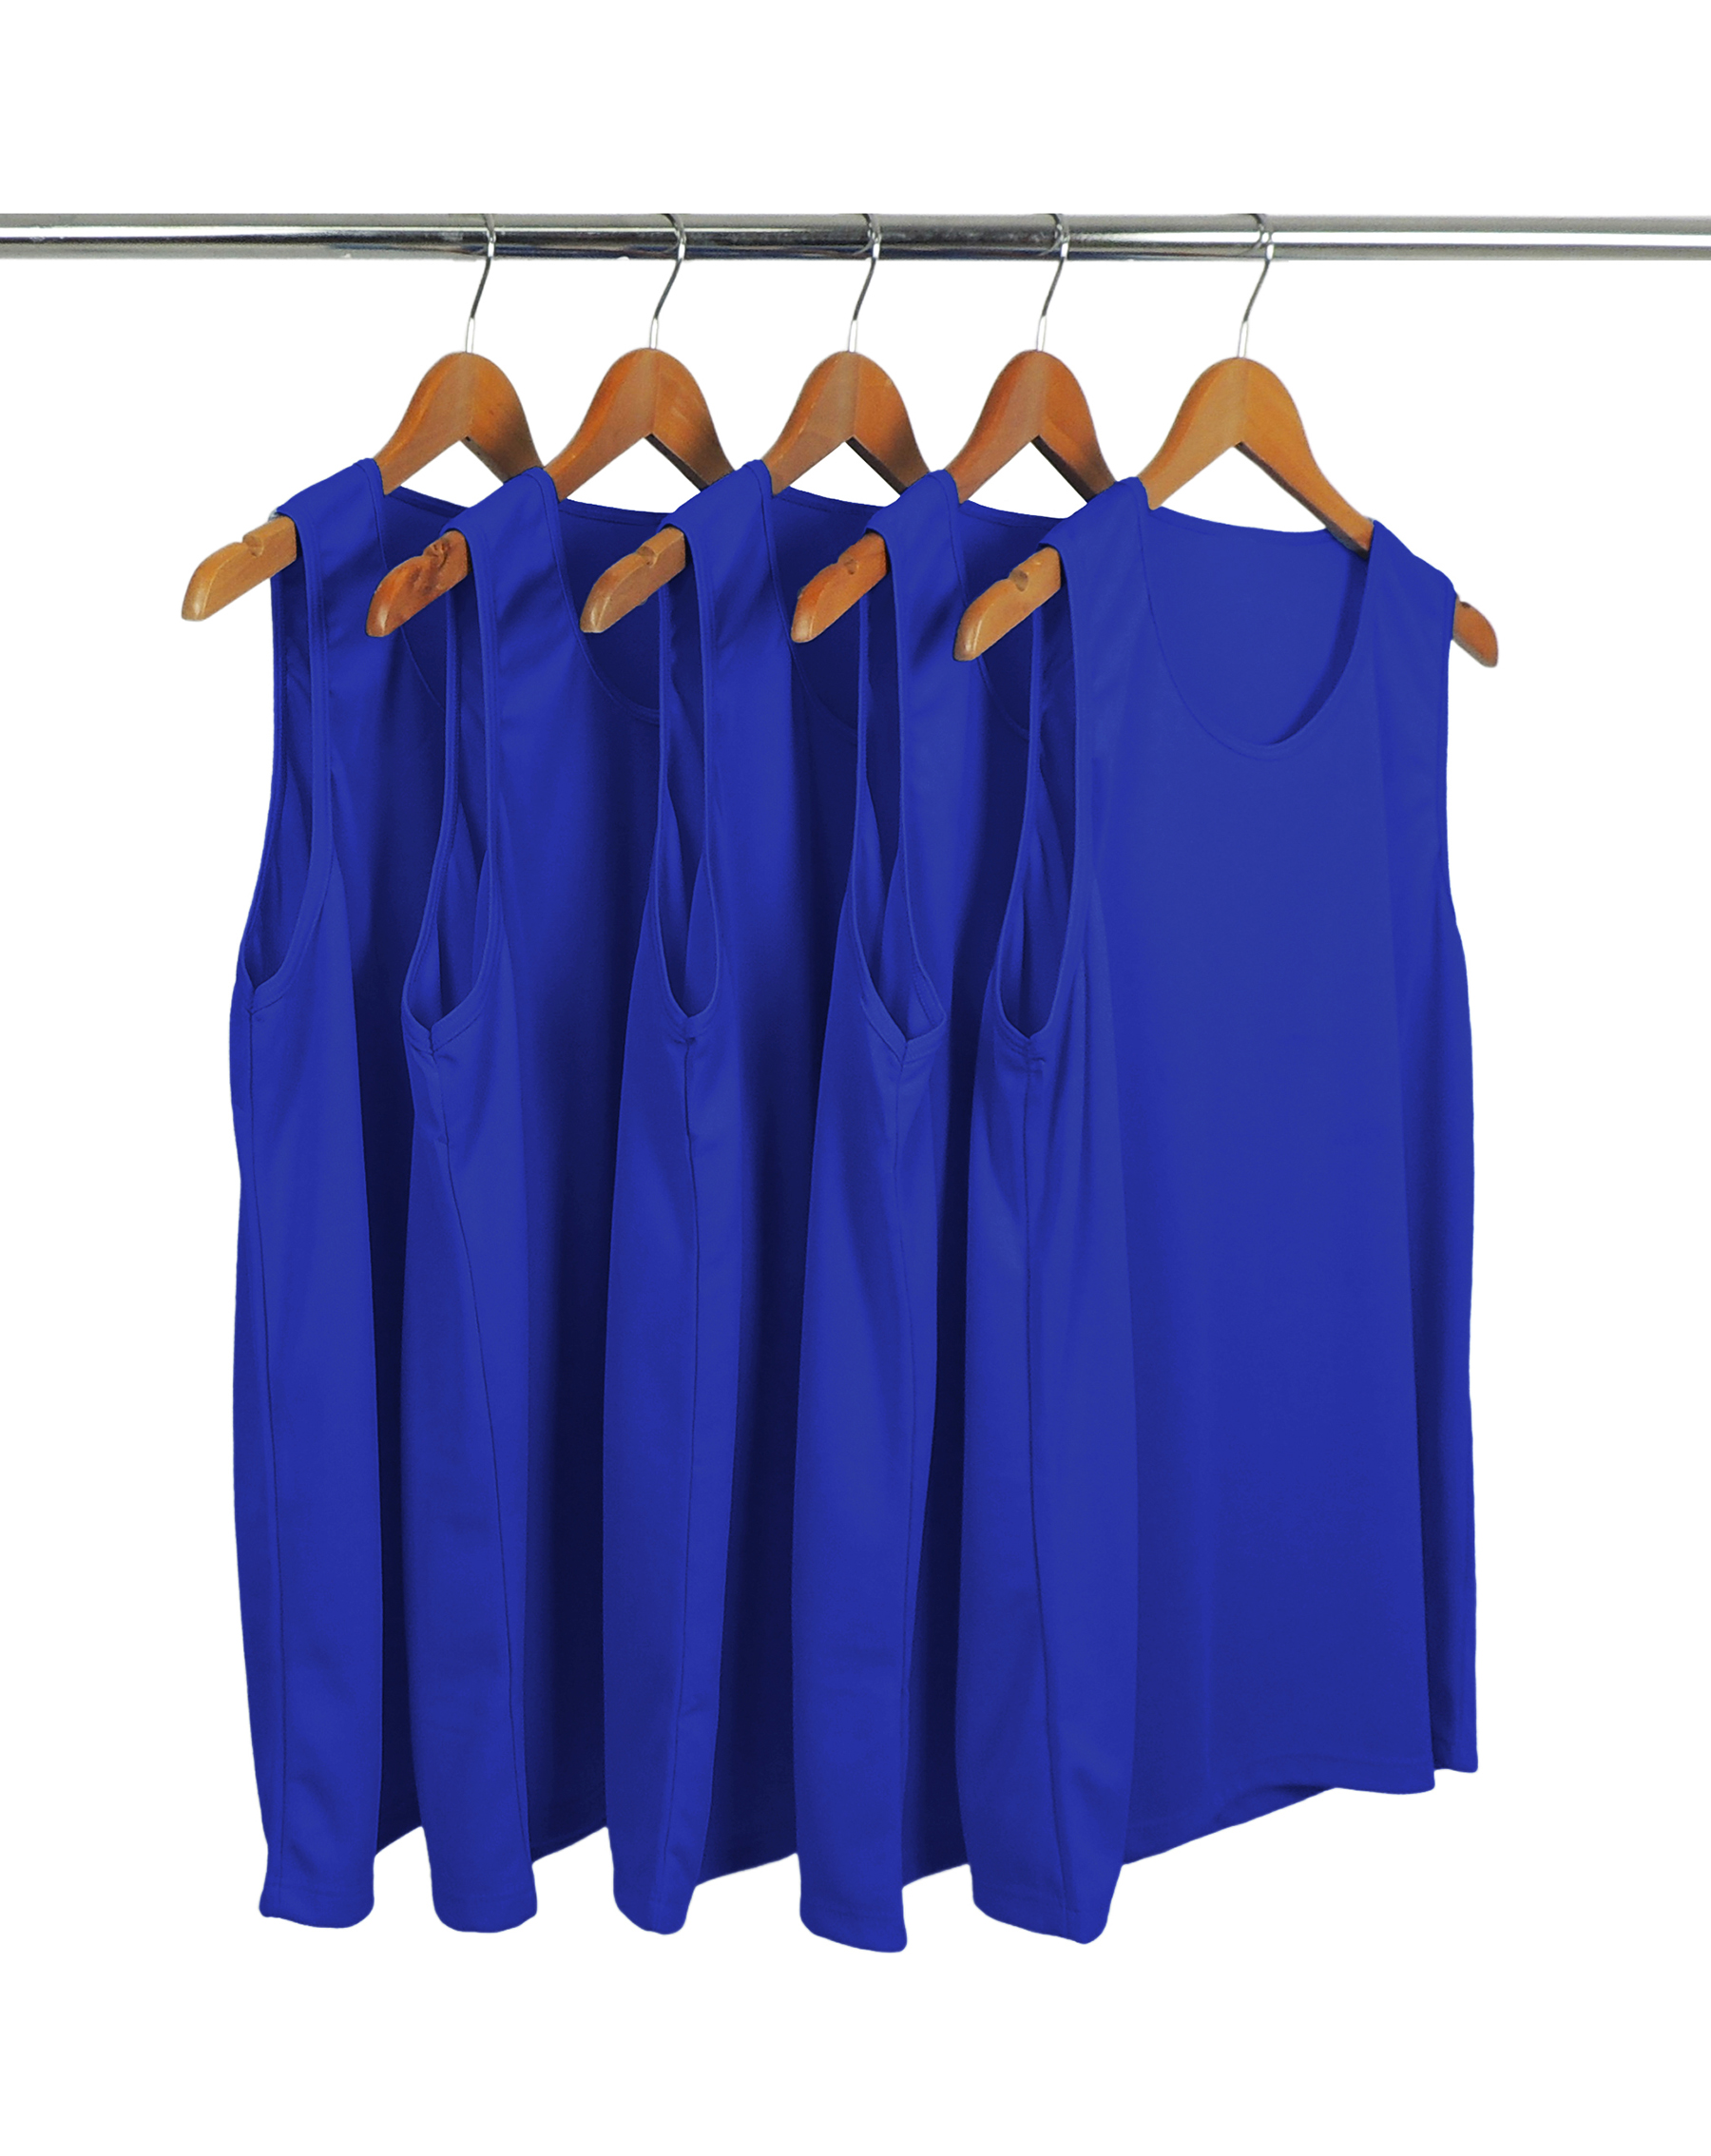 KIT 5 Regatas Dry Fit Azul Royal Proteção UV 30+